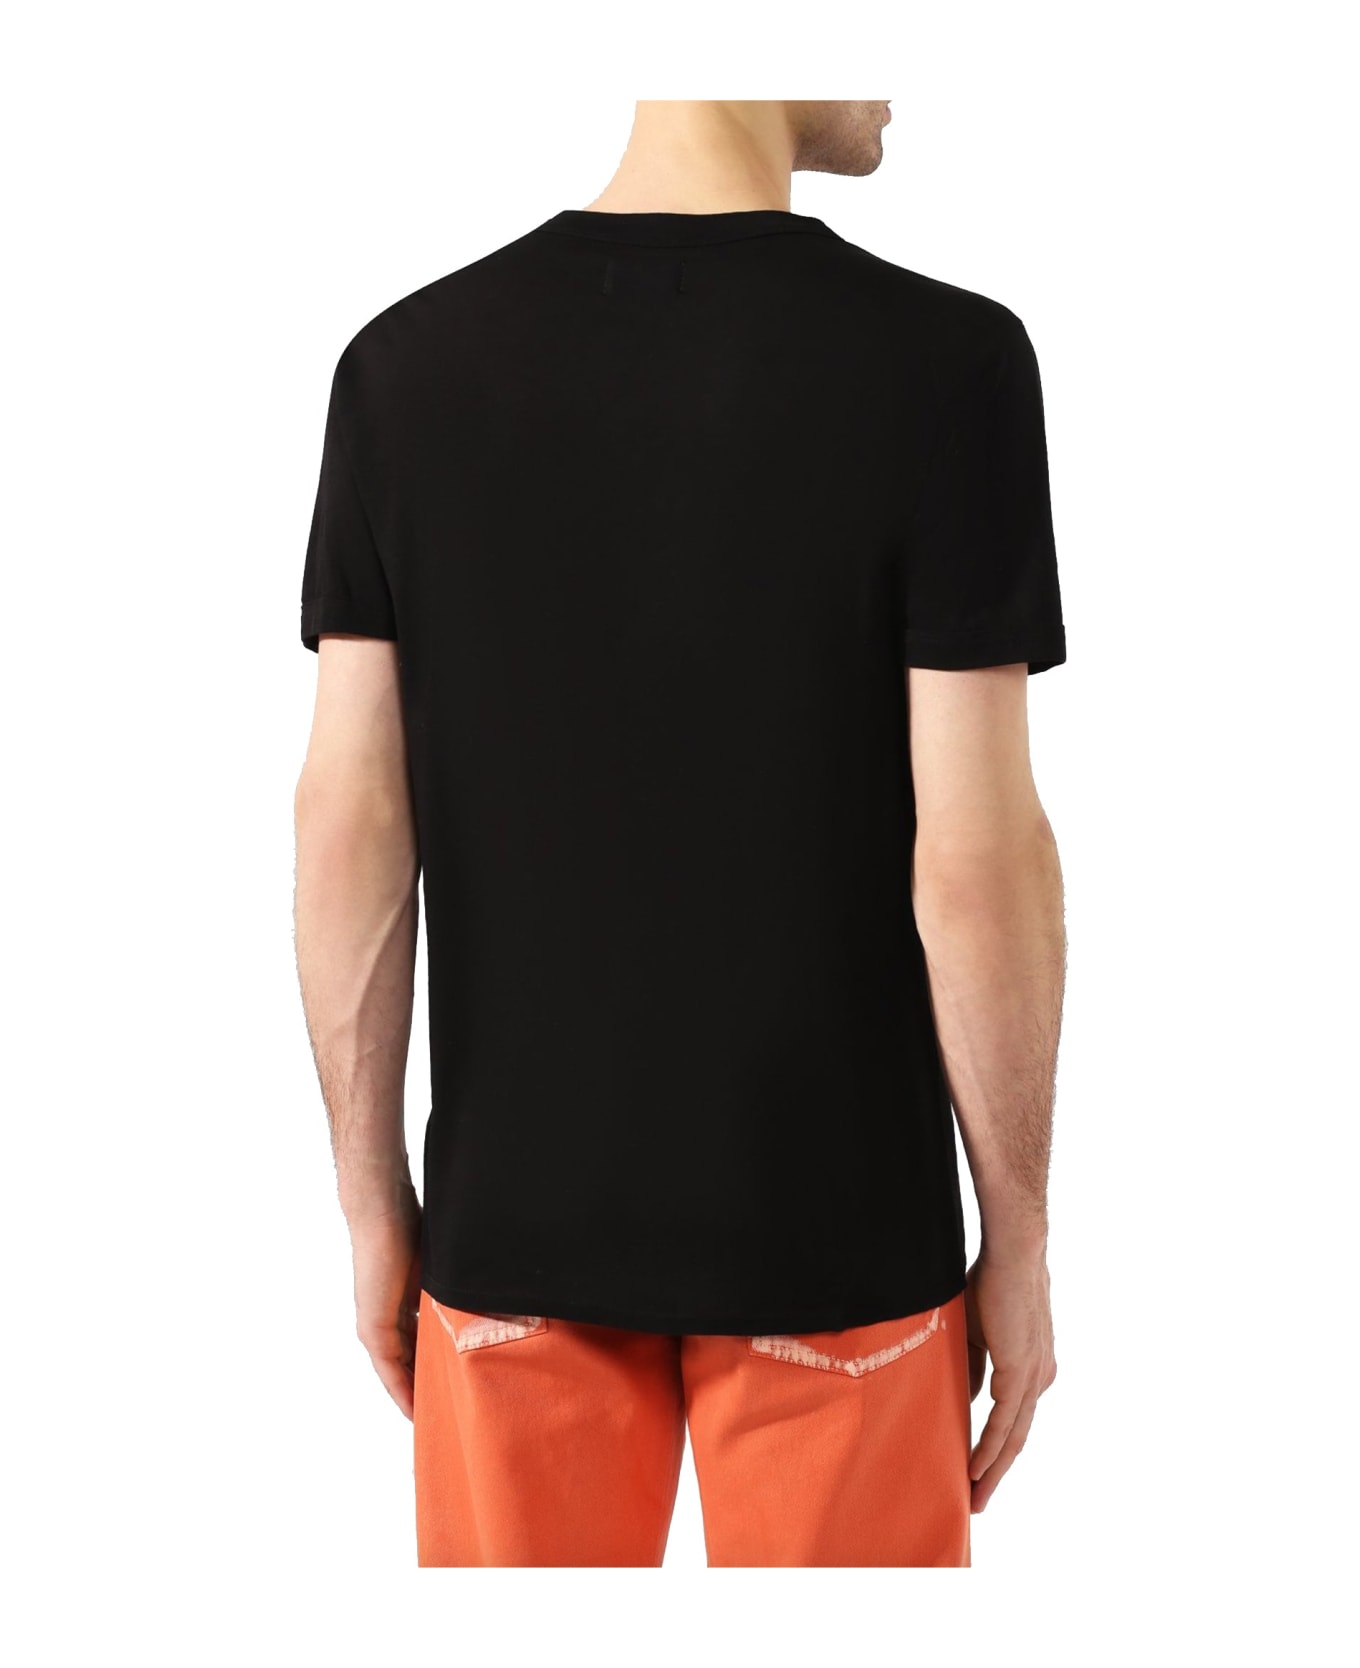 RTA Cotton T-shirt - Black